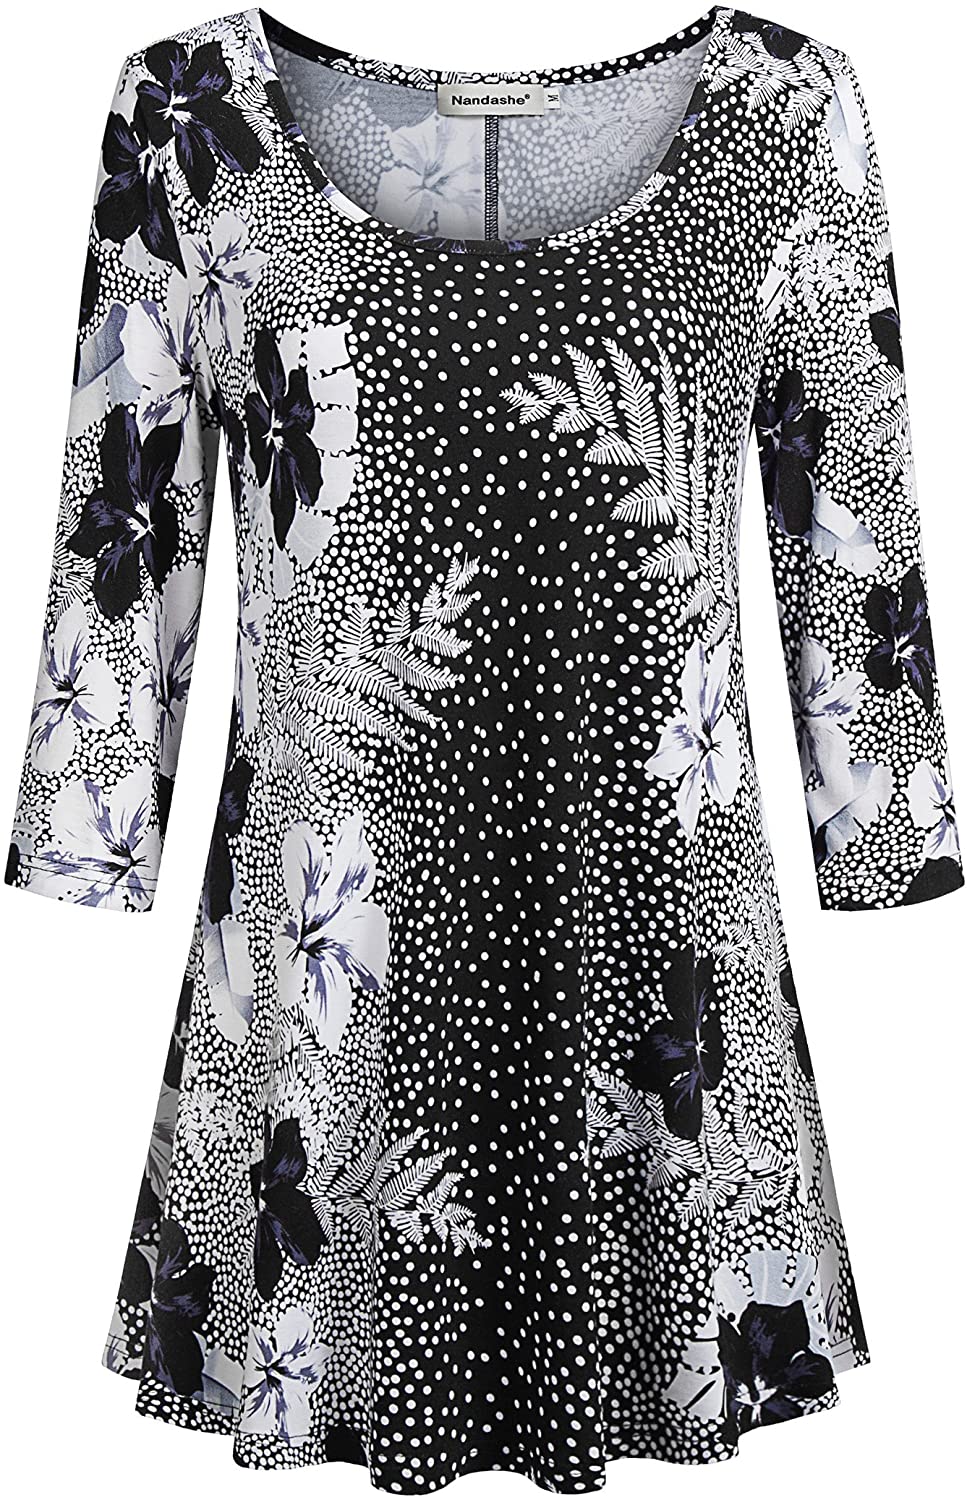 Nandashe Womens 3/4 Sleeves Floral Tunic Shirts Summer Casual Dressy Blouse Tops 